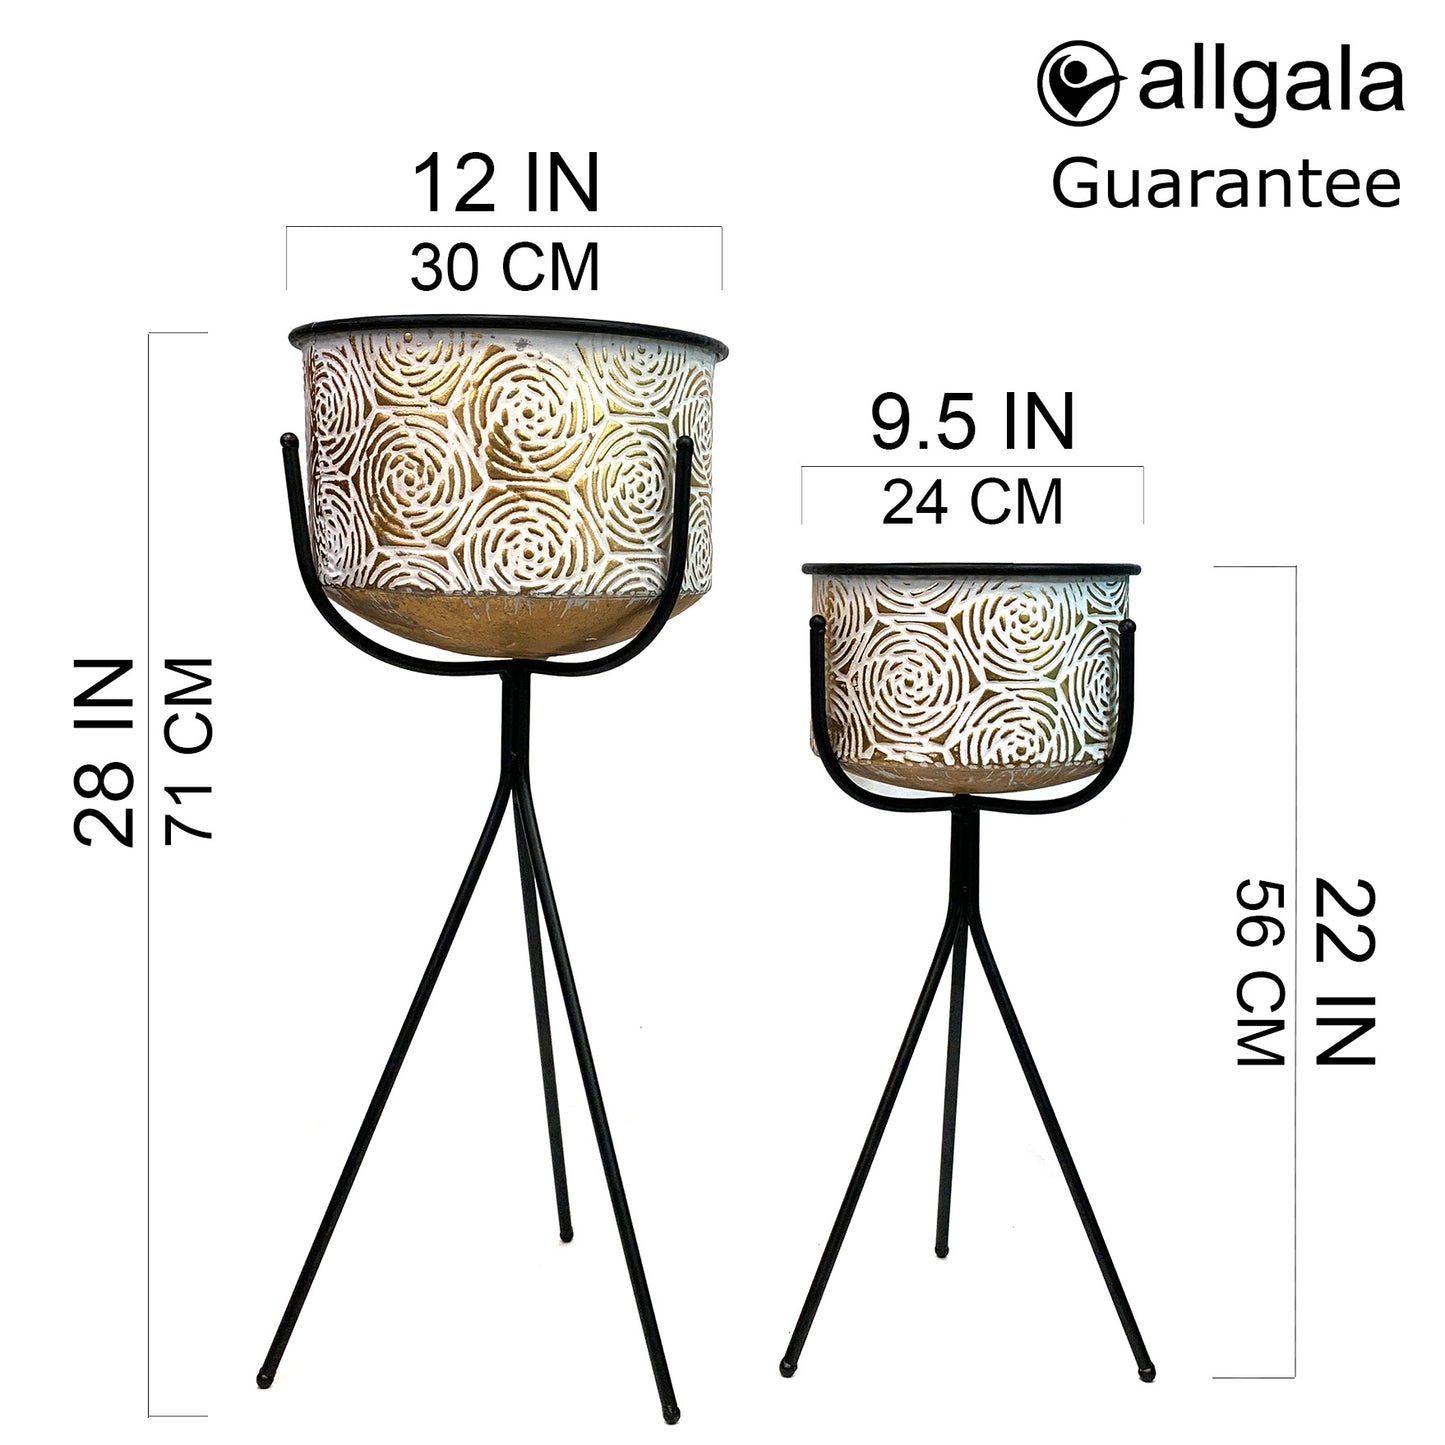 Allgala Planter Pot 2-PC Set Galvanized Planter Pot Gold Rose Design with 3-leg Iron Stands